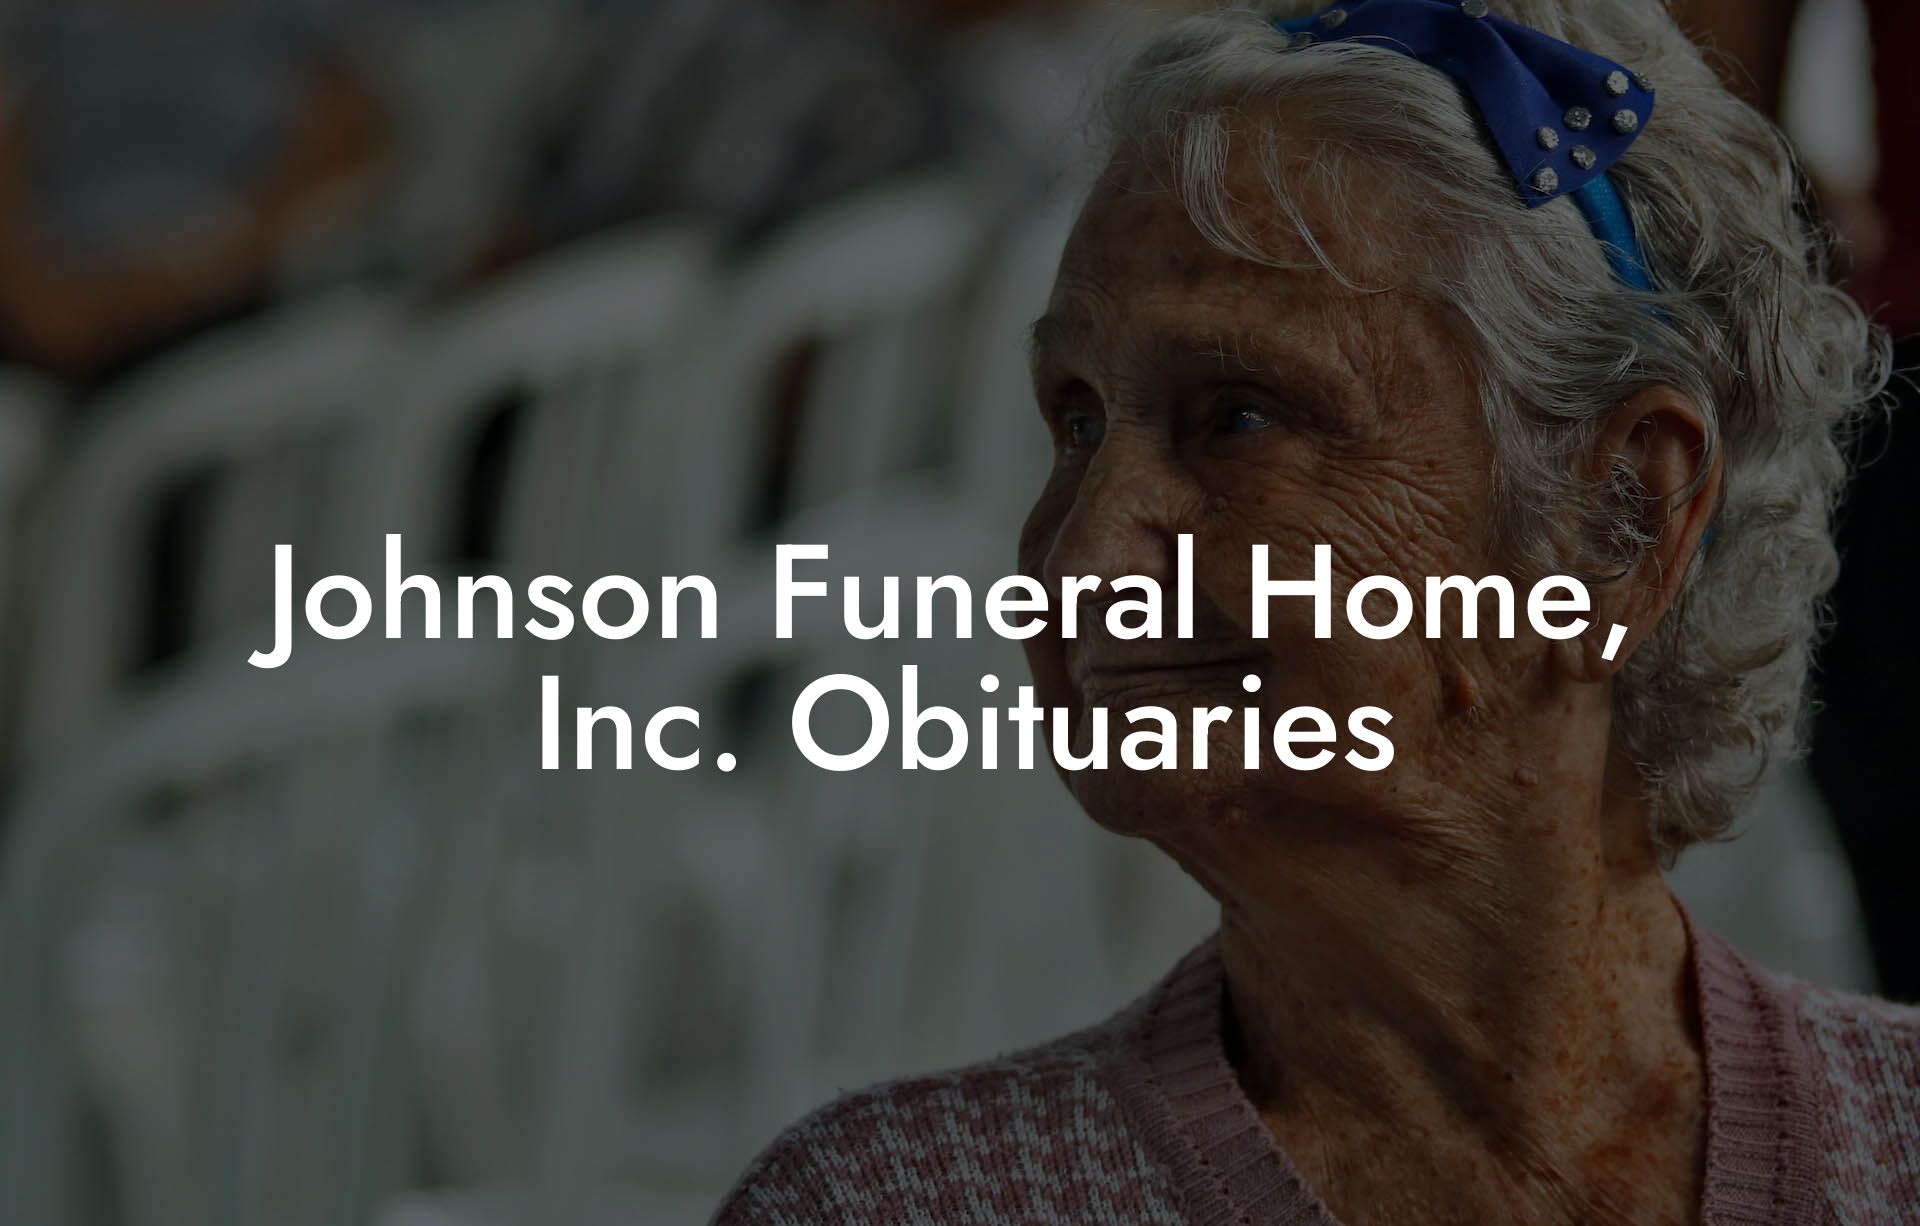 Johnson Funeral Home, Inc. Obituaries